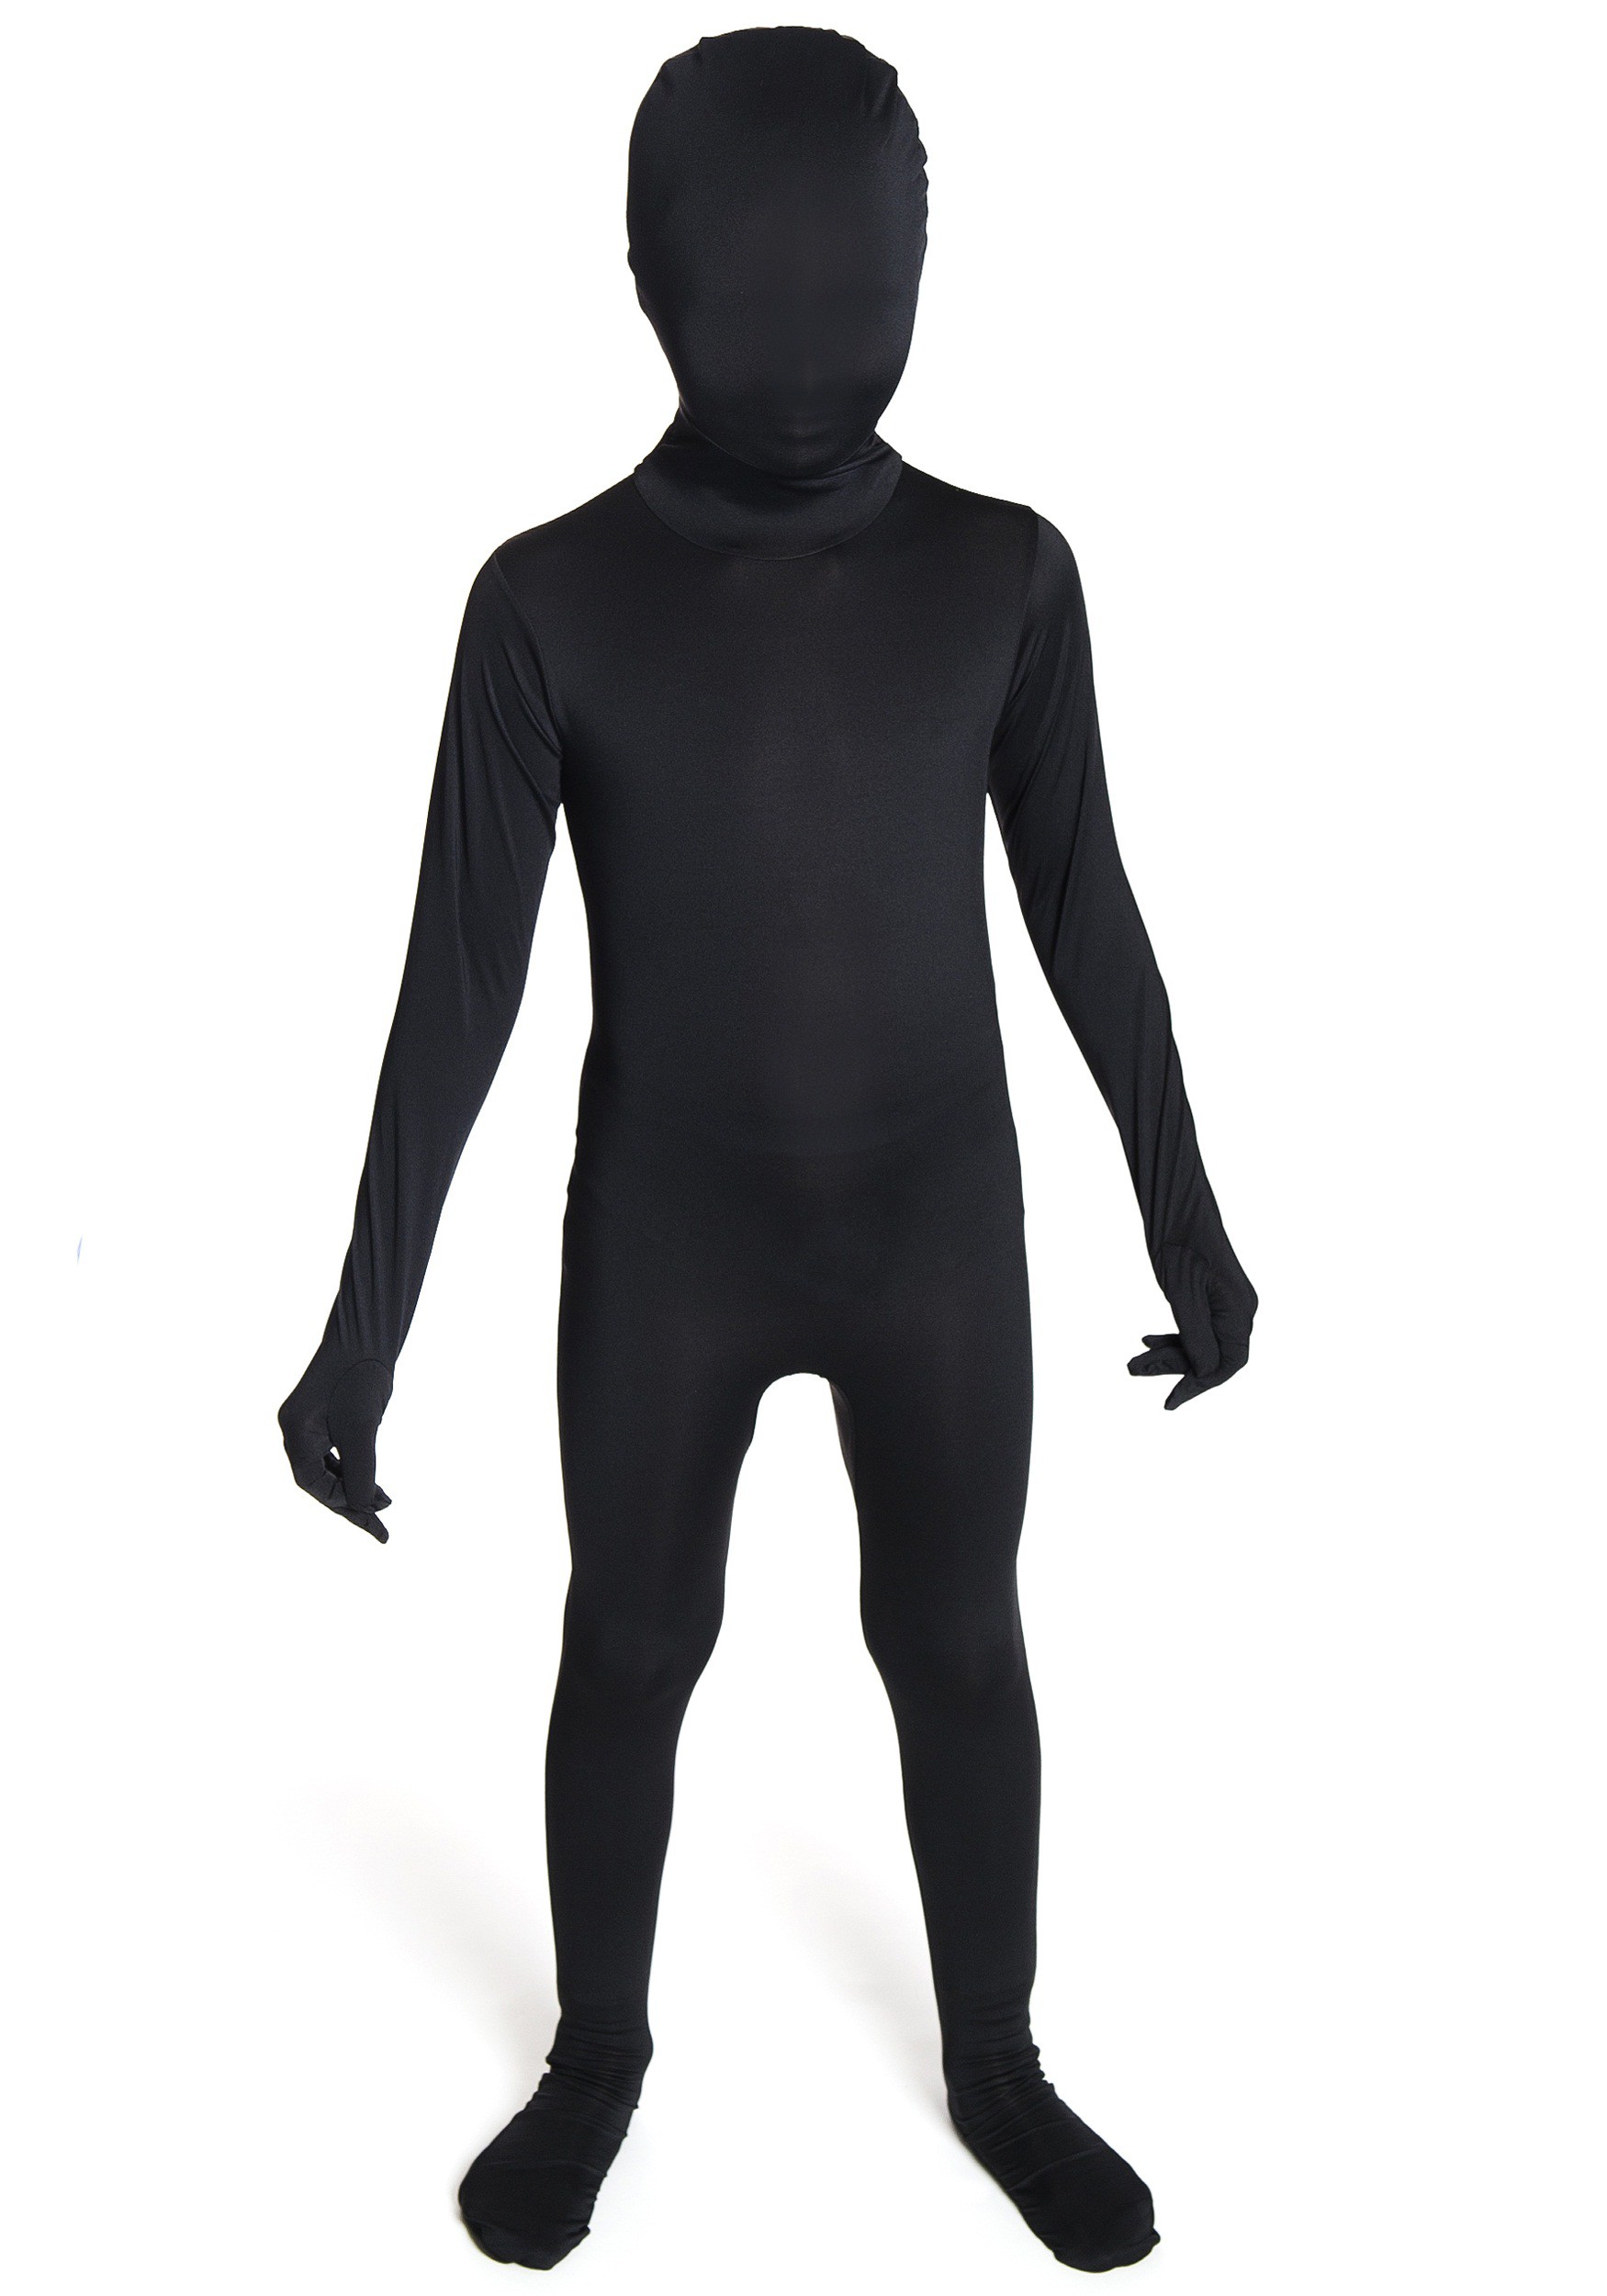 Black Kids Morphsuit Costume